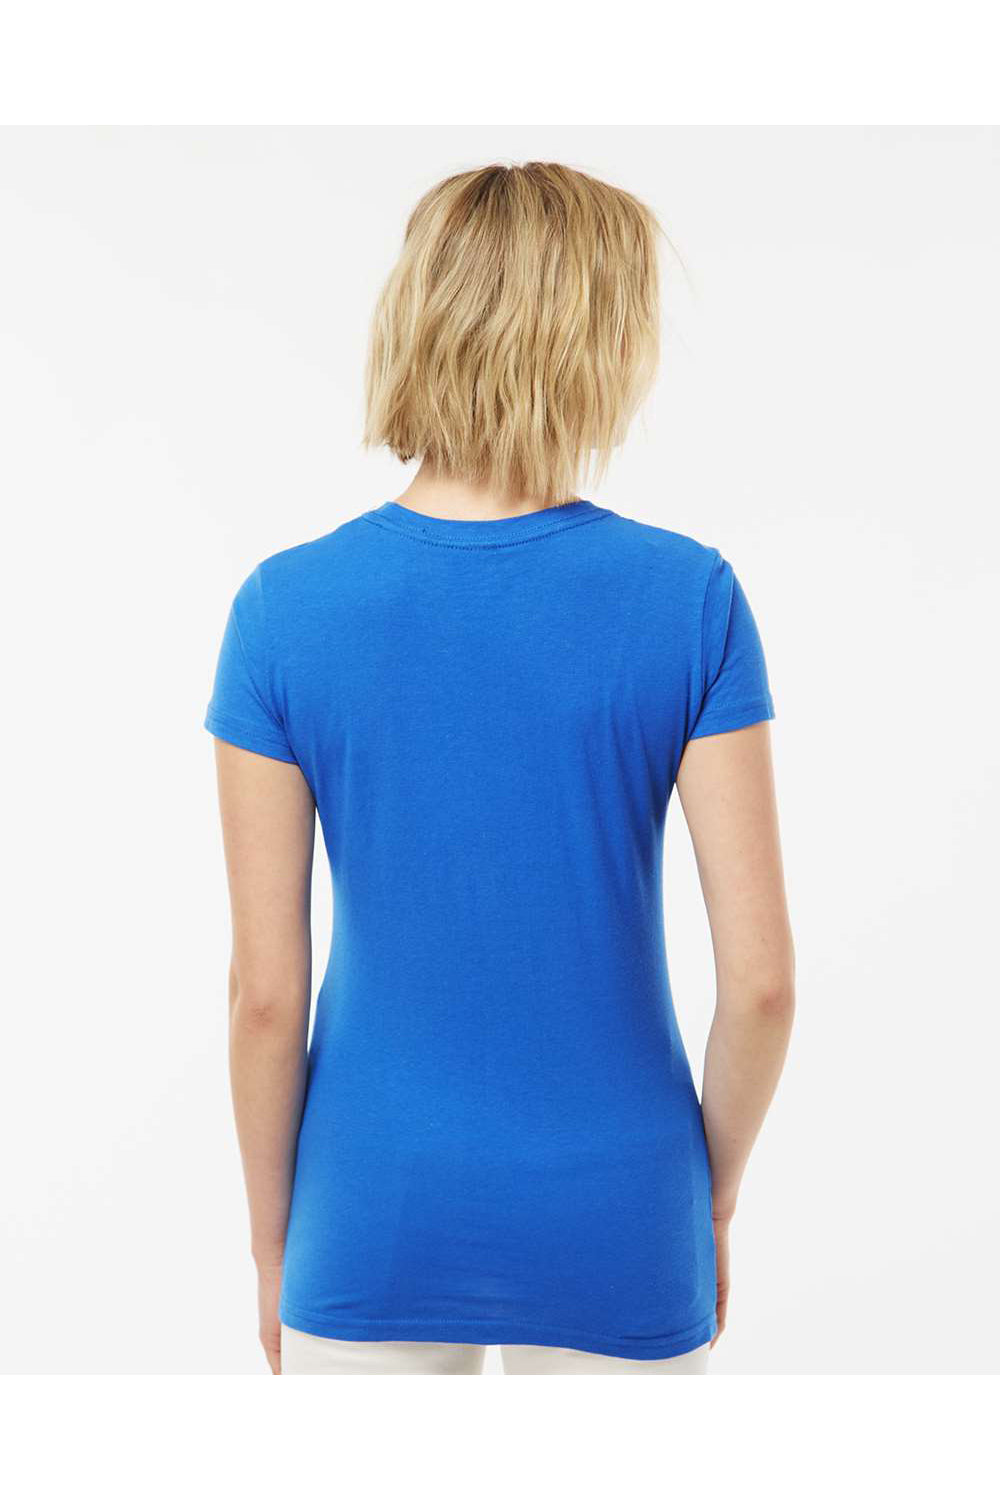 Tultex 213 Womens Fine Jersey Slim Fit Short Sleeve Crewneck T-Shirt Royal Blue Model Back